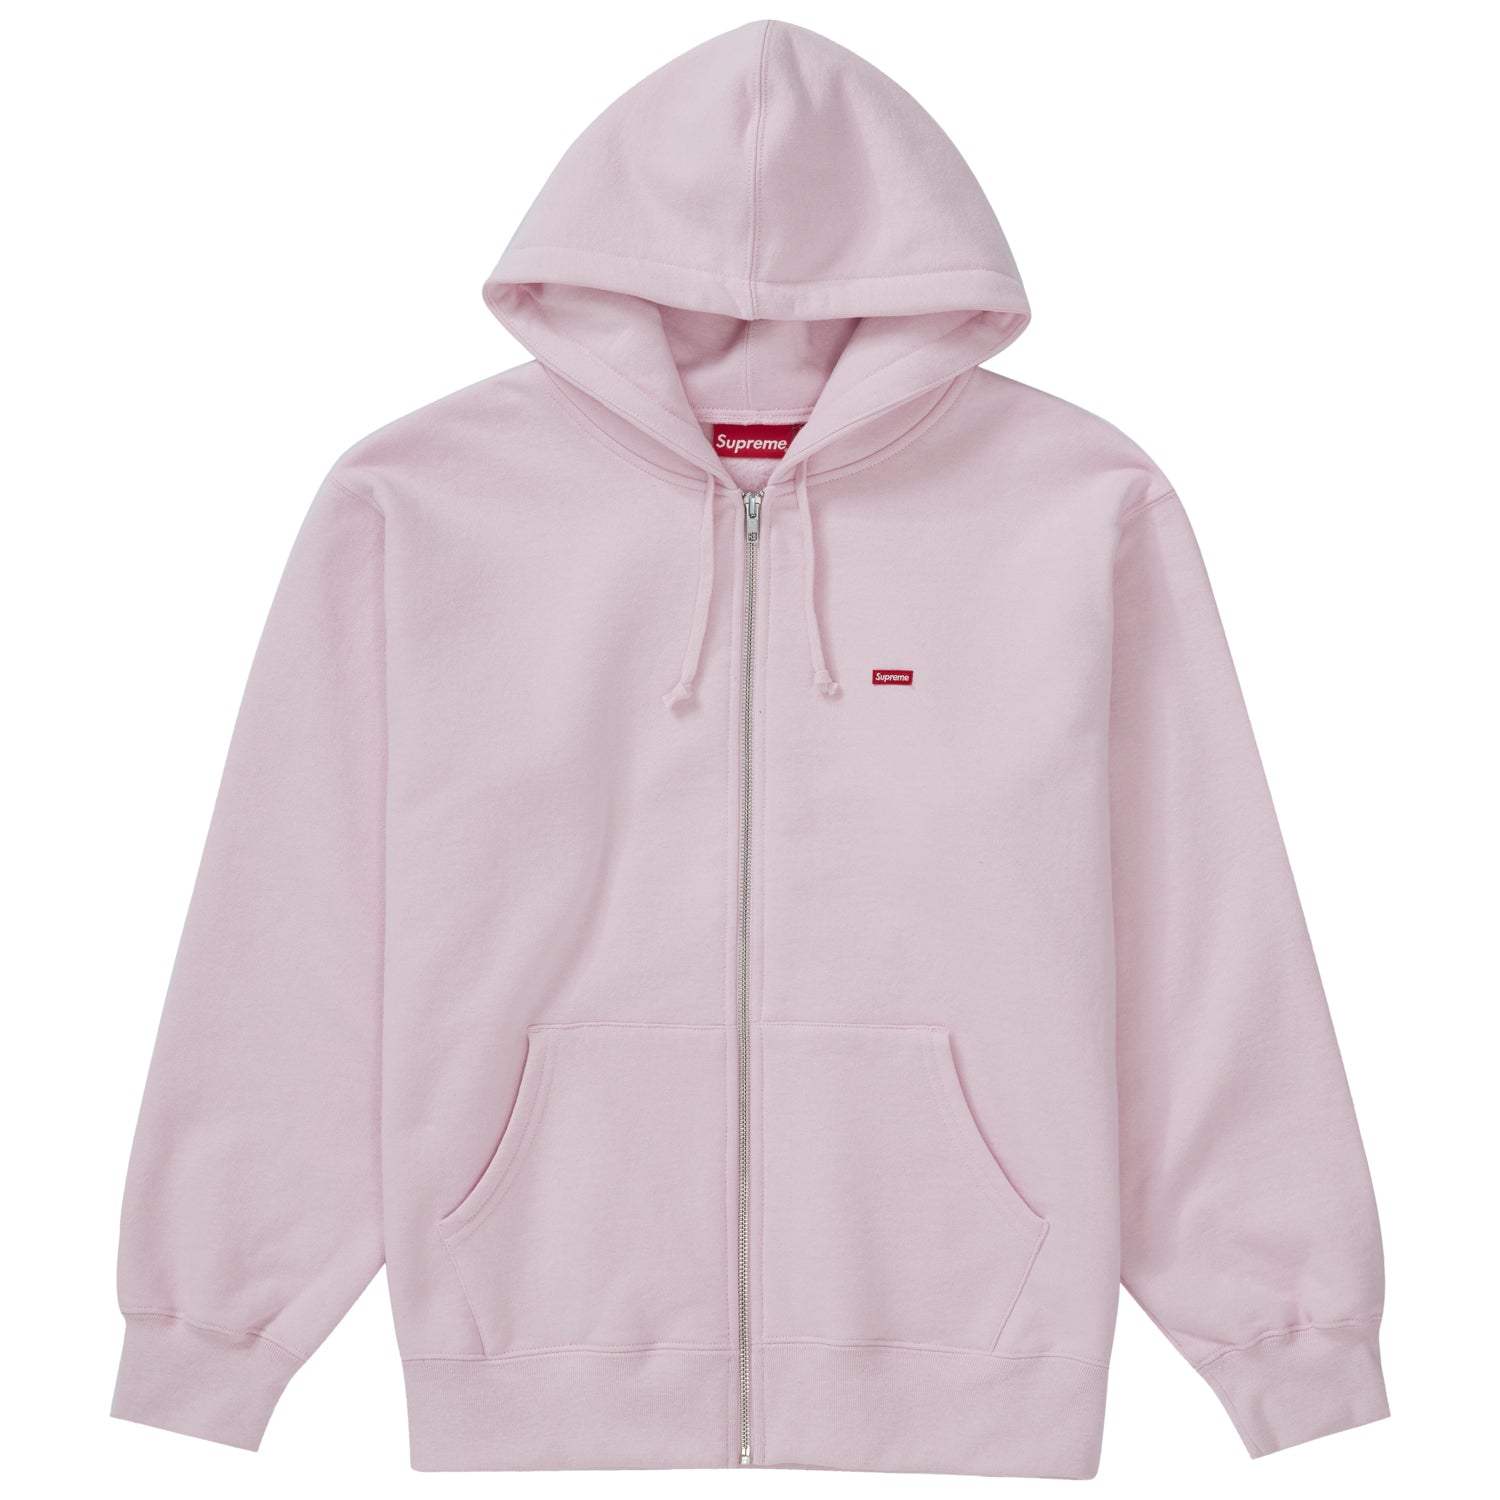 Supreme Small Box Zip Up Hooded Sweatshirt Light Pink